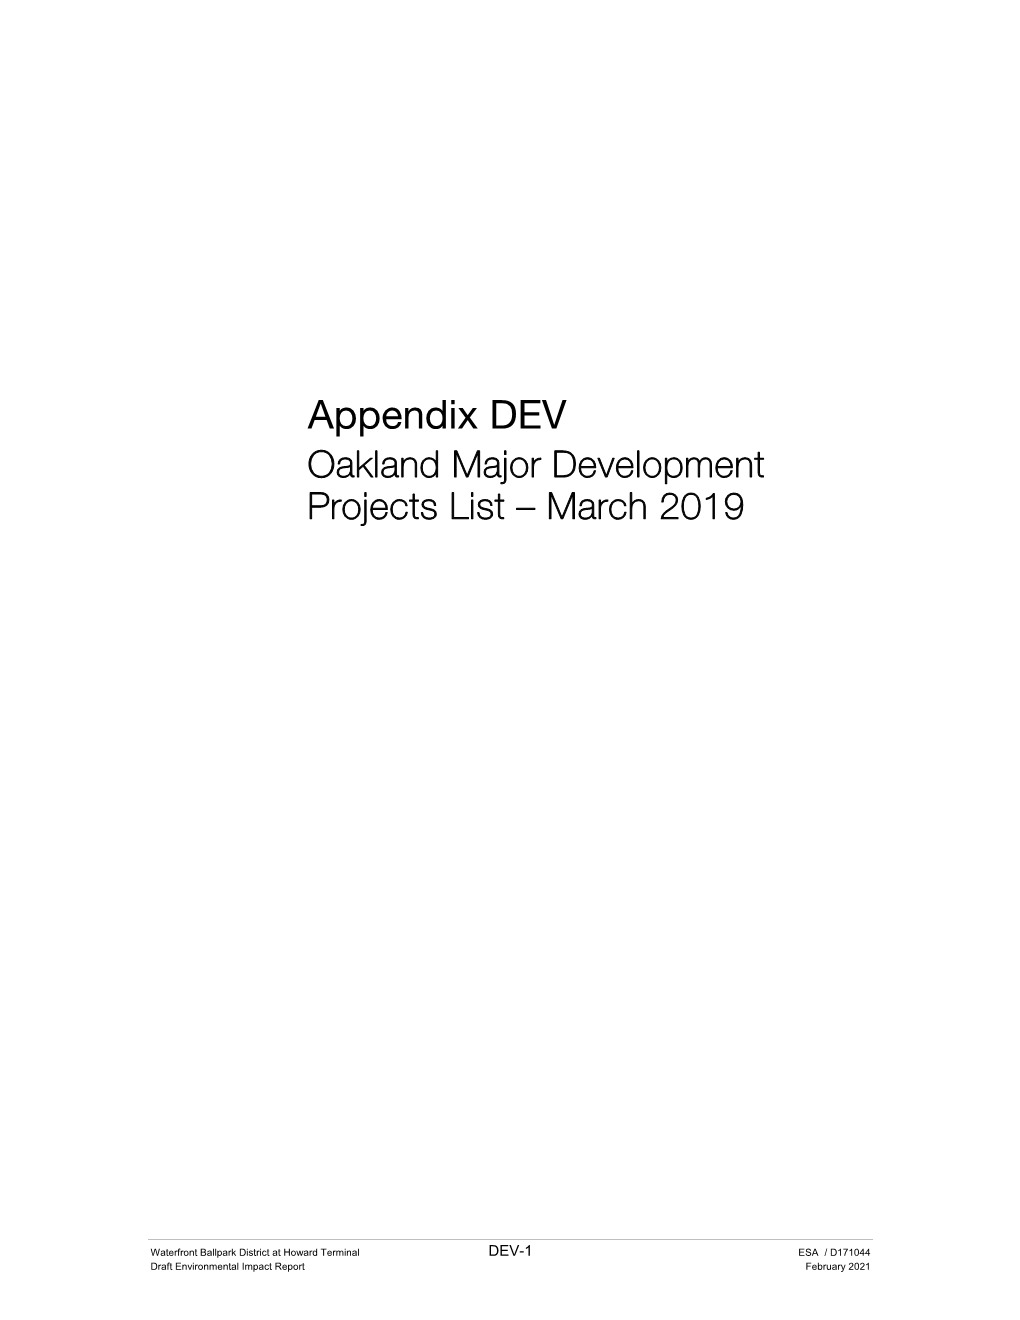 Appendix DEV Oakland Major Development Projects List – March 2019